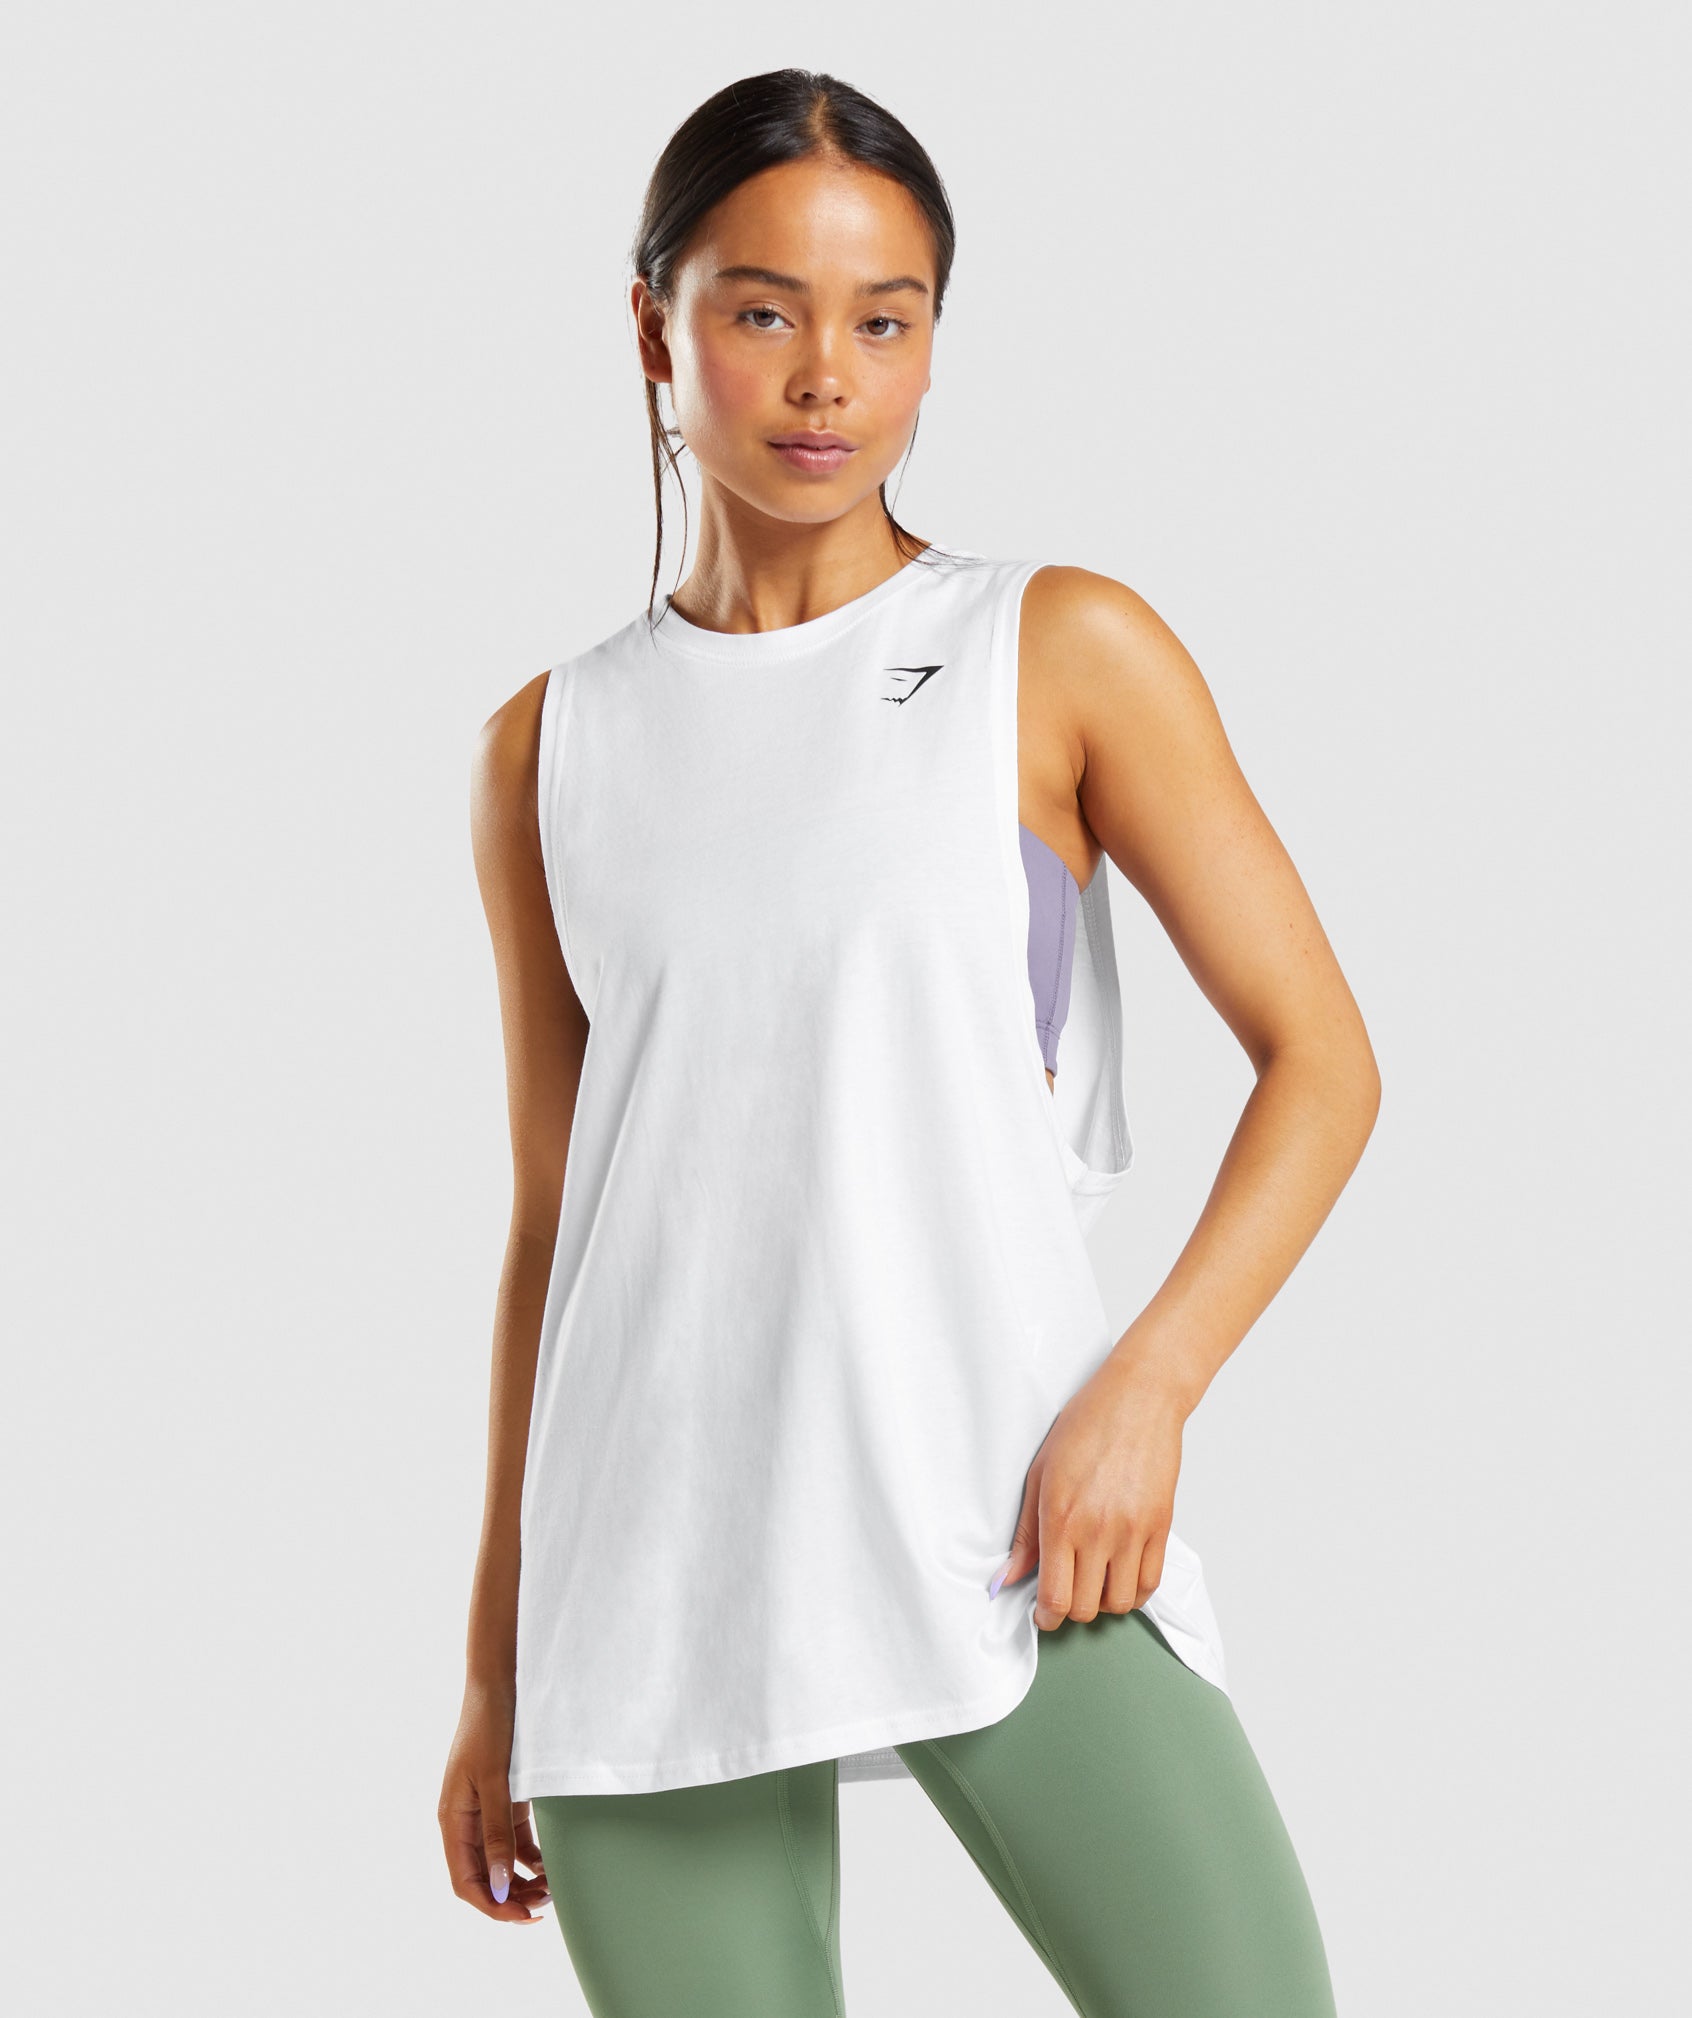 HSMQHJWE Spaghetti Strap Tank Tops For Women Built In Bra Workout Tops For  Women Women Summer V-Neck Top Shirt Solid Sleeveless Tank Tops Cami T-Shirt